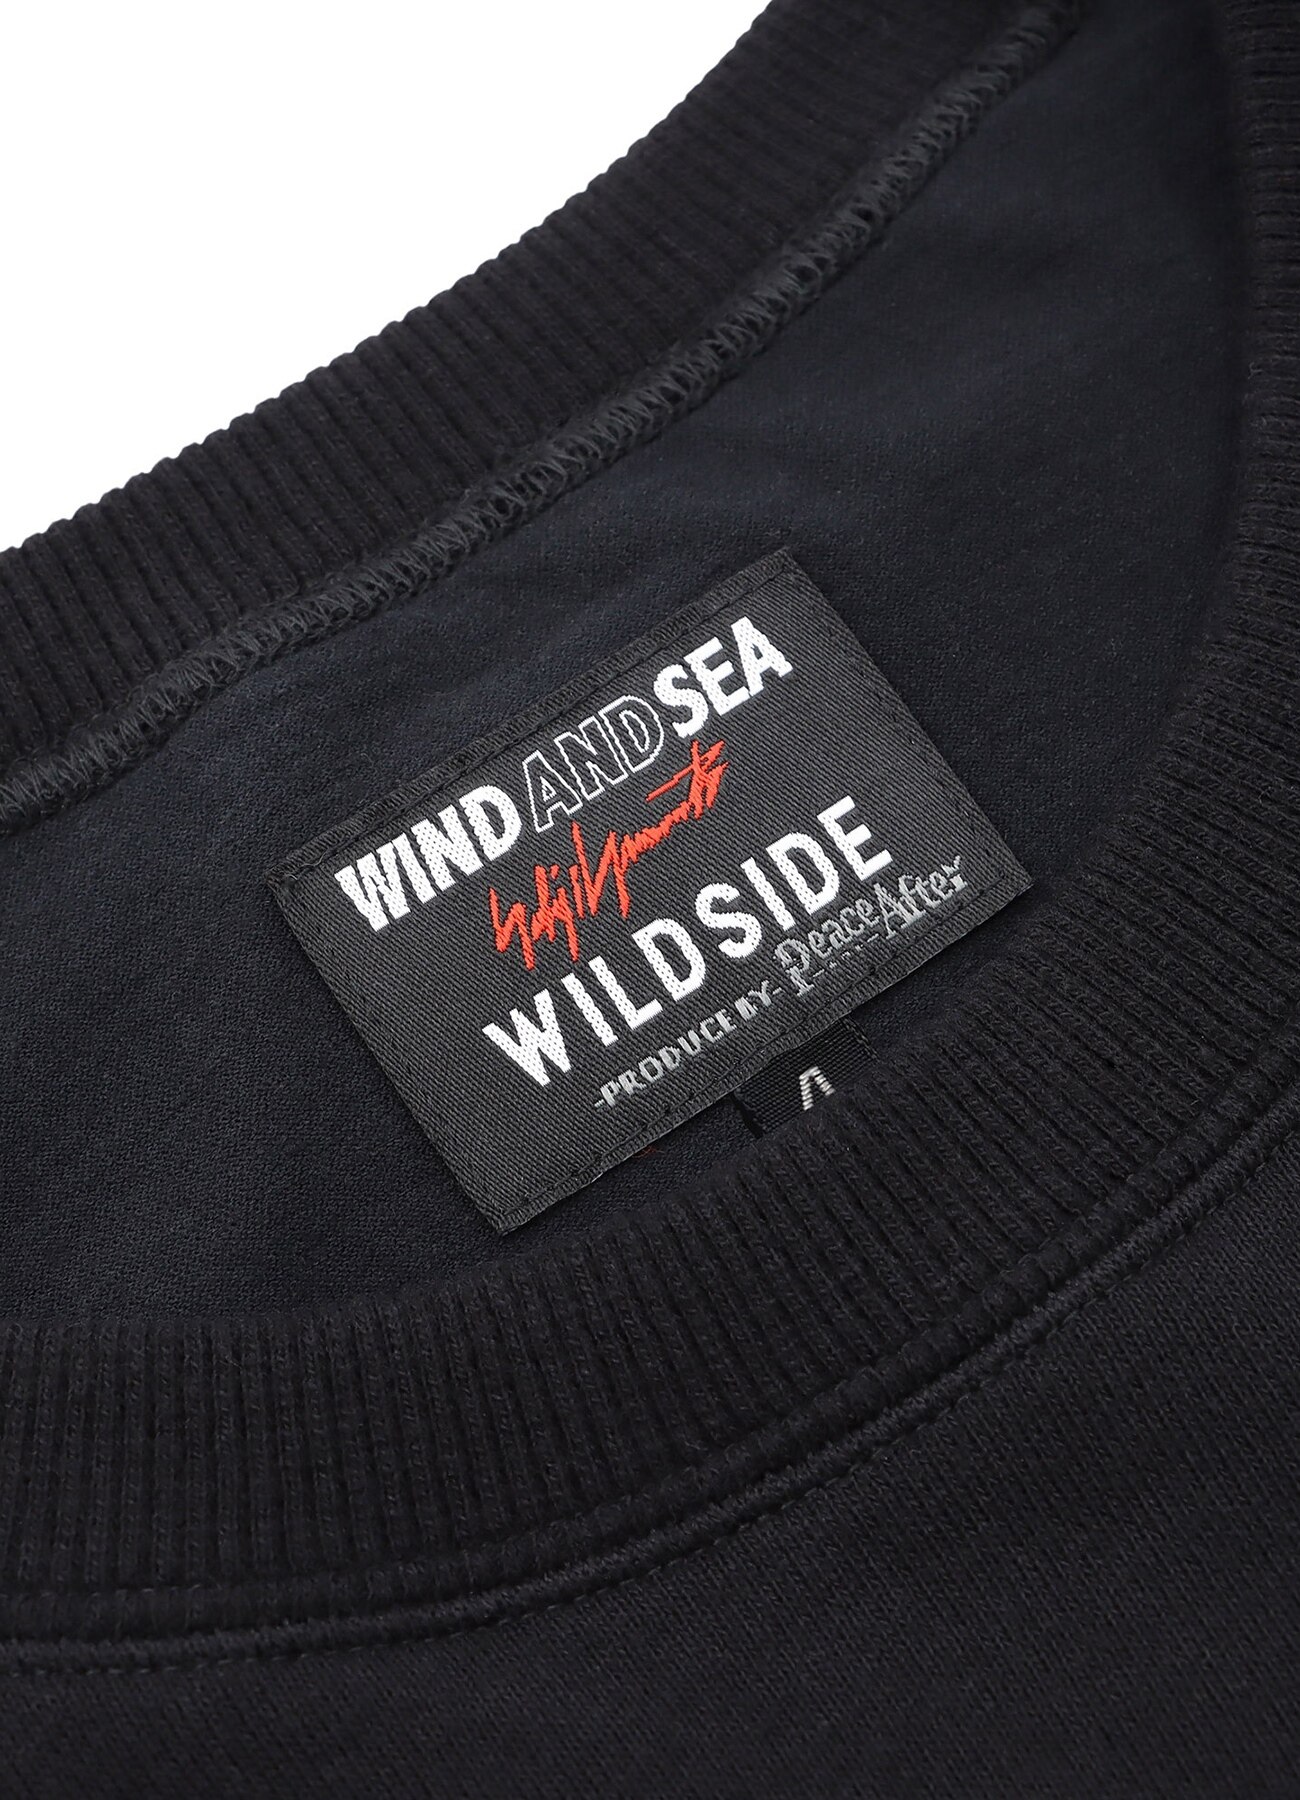 WILDSIDE × WIND AND SEA Damage Cutting Sweat Shirt(S BACK): WIND